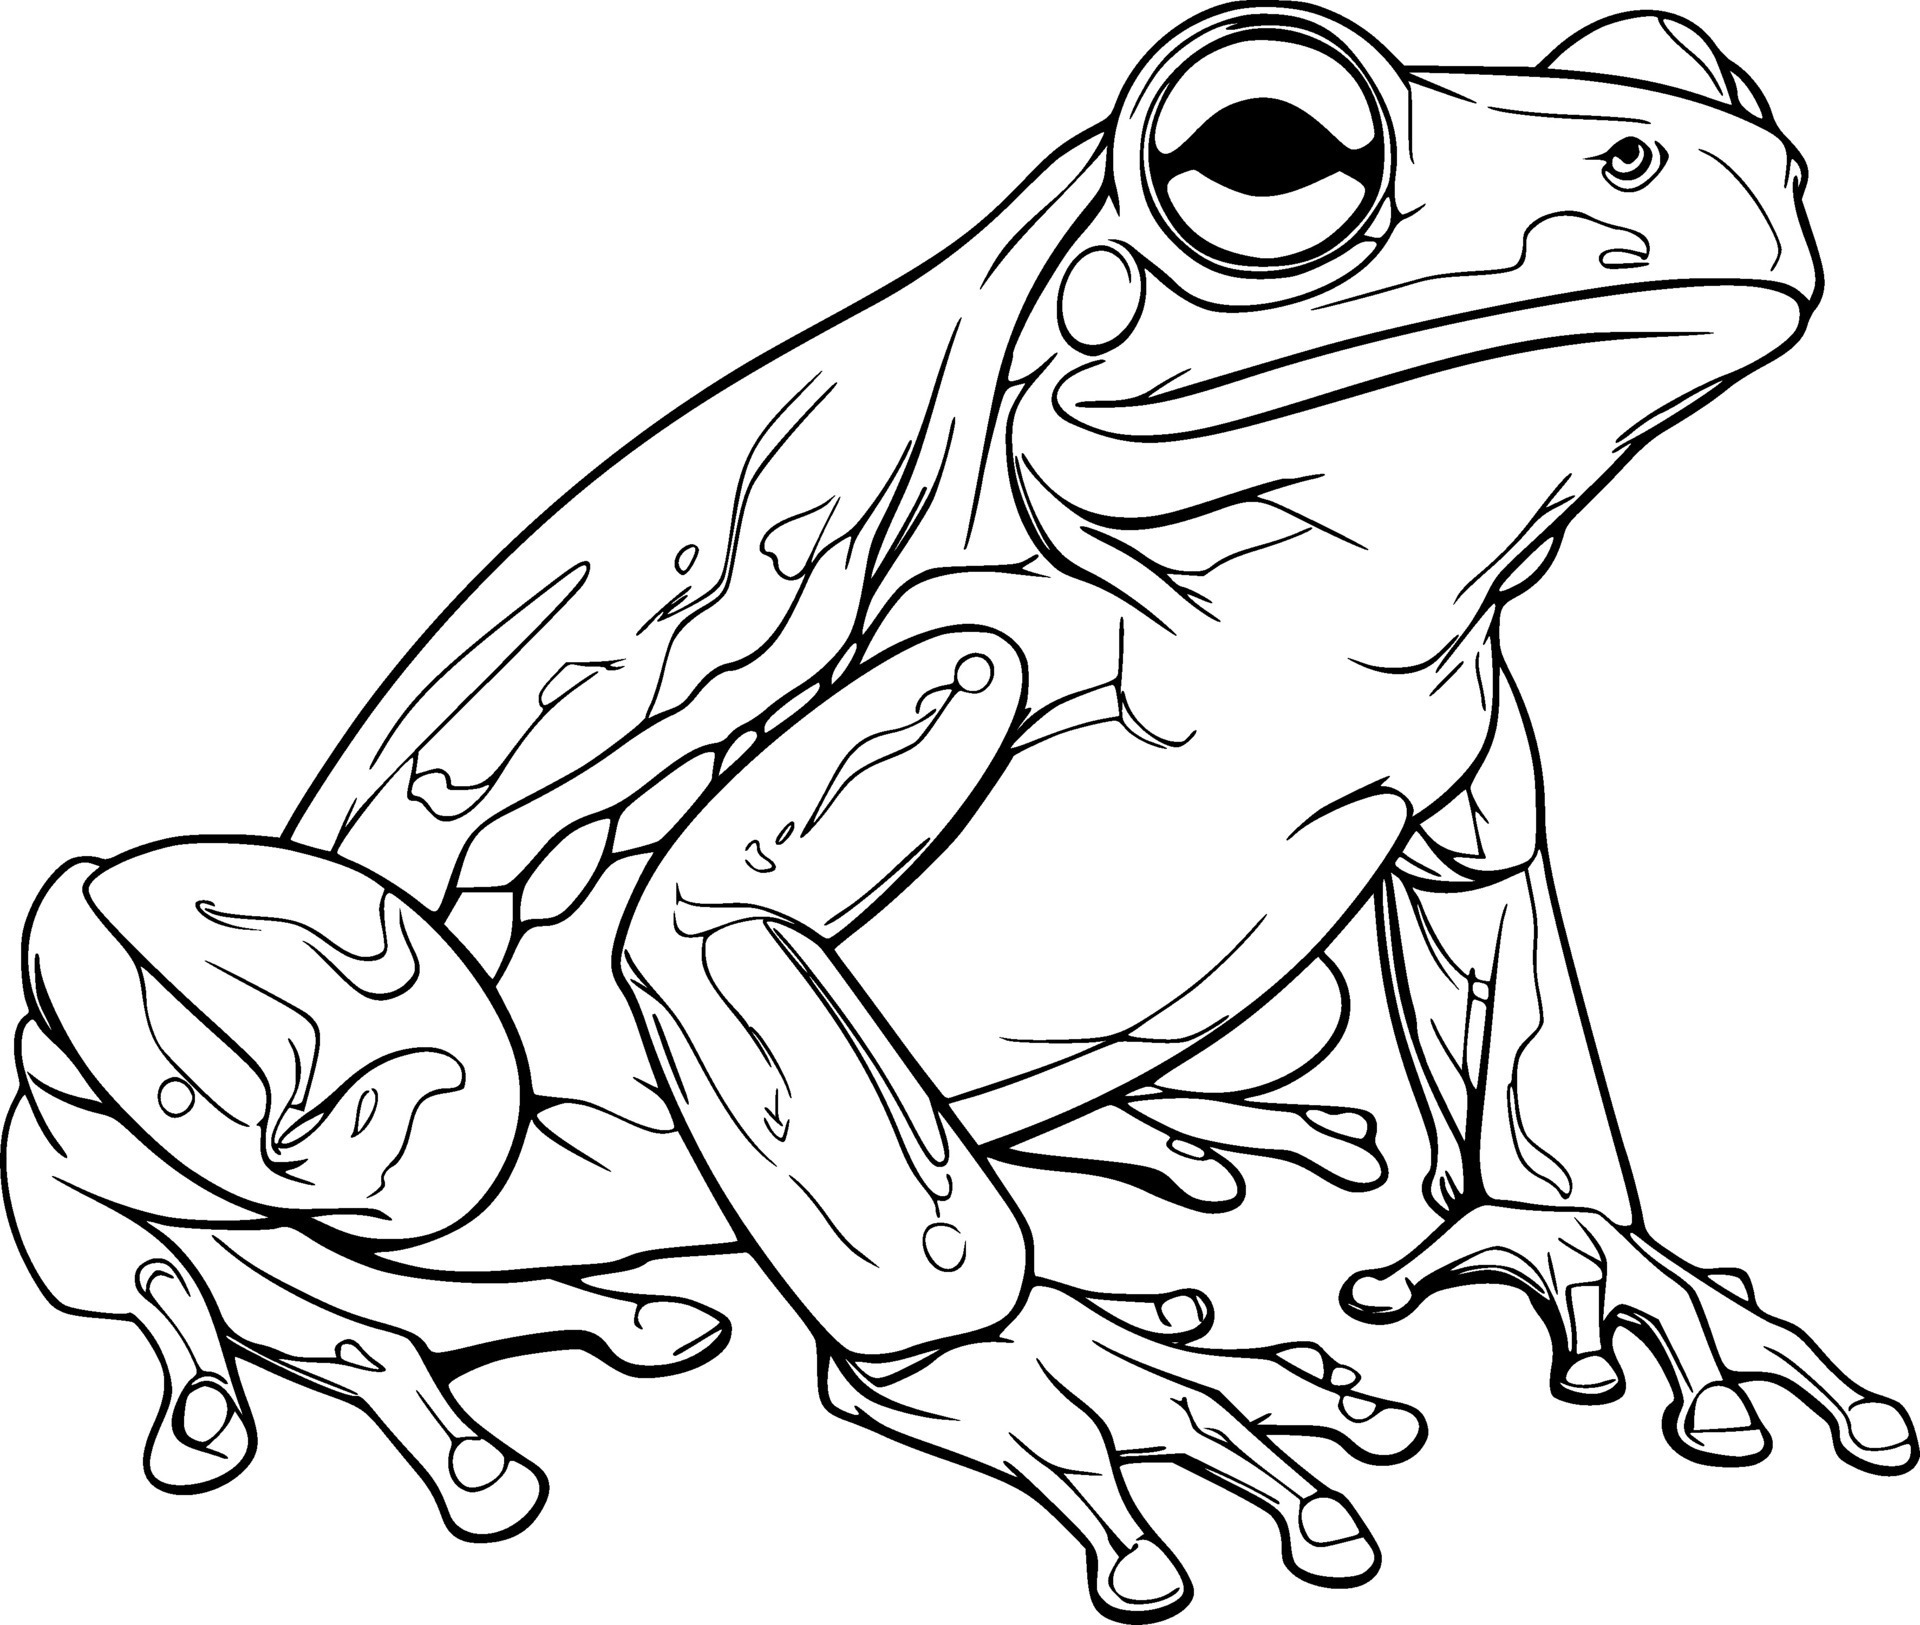 Realistic Frog Vector Illustration 29698244 Vector Art at Vecteezy